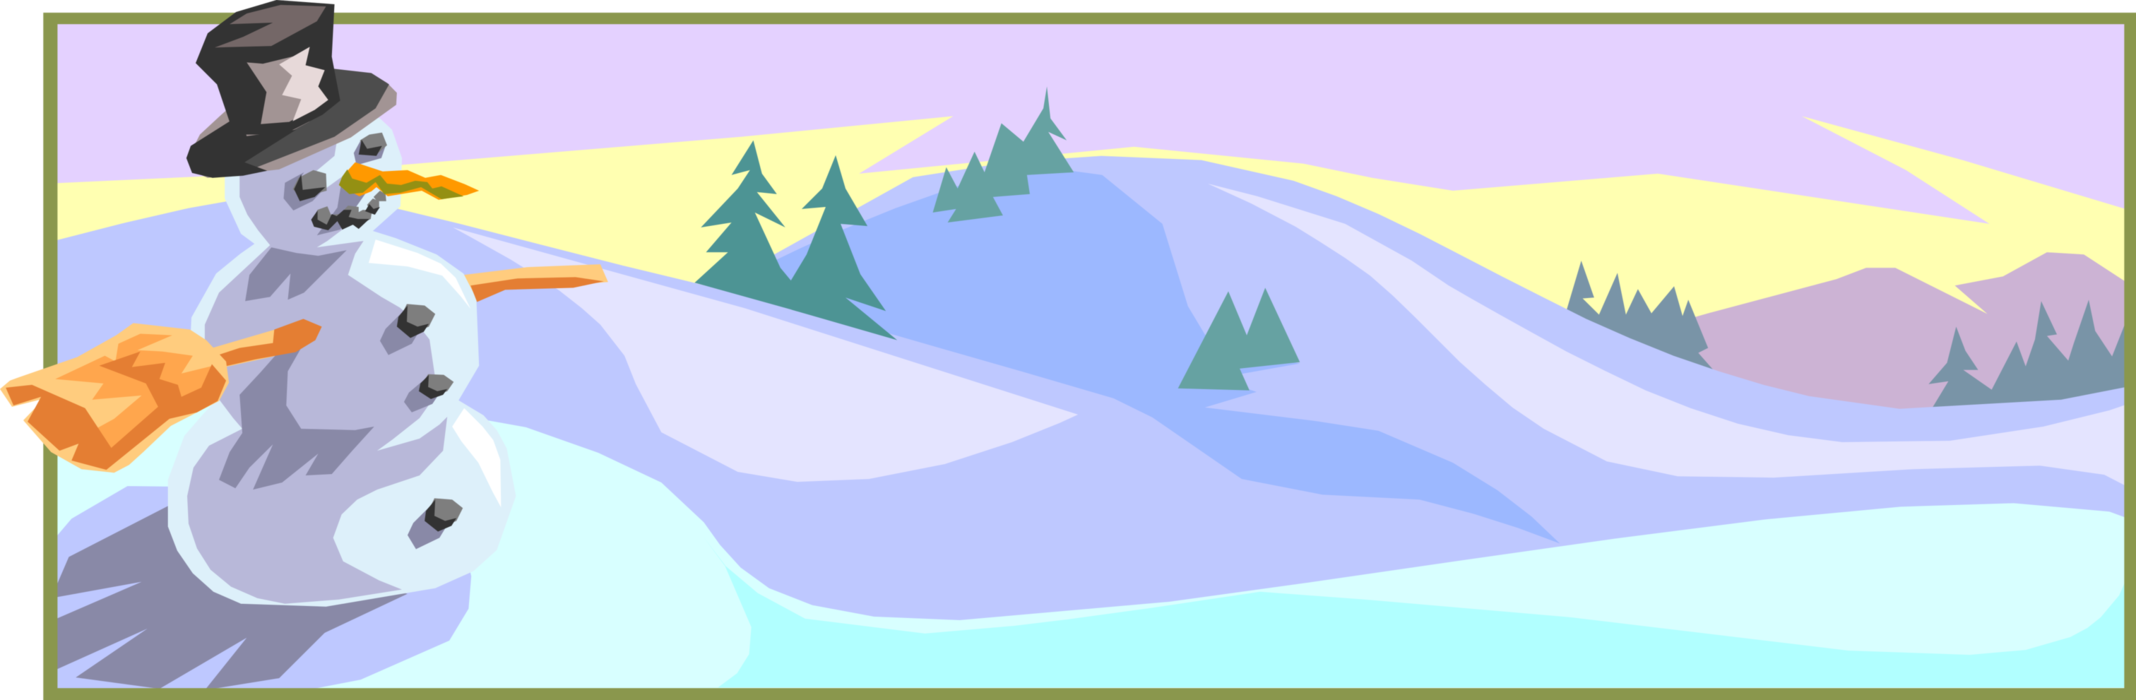 Vector Illustration of Winter Landscape Banner with Snowman Anthropomorphic Snow Sculpture